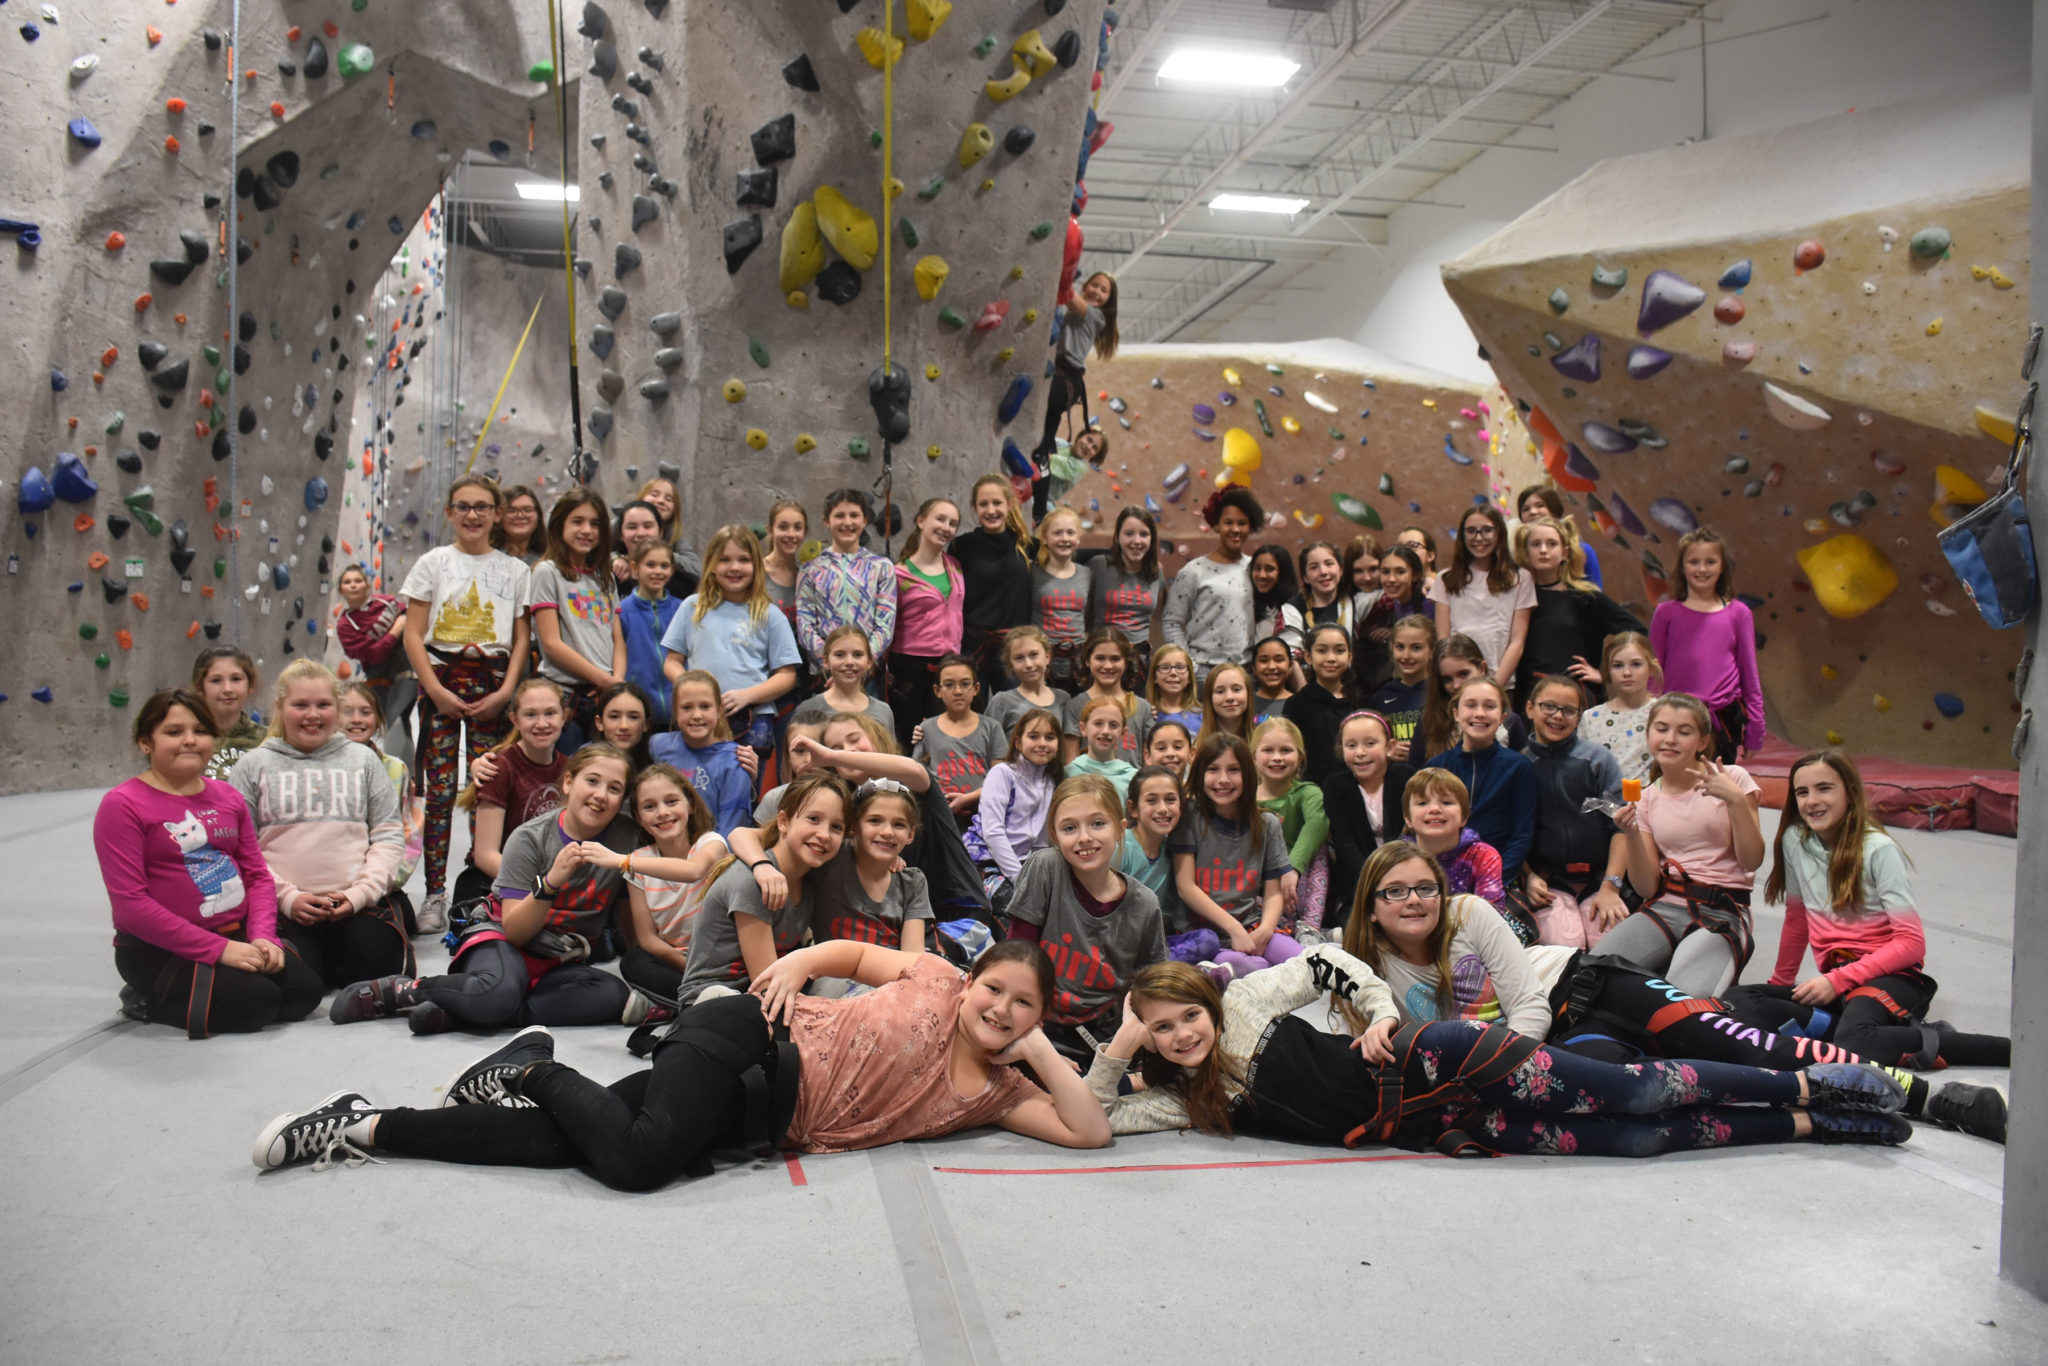 Girls Rock Climb-a-thon, Saturday, February 8th